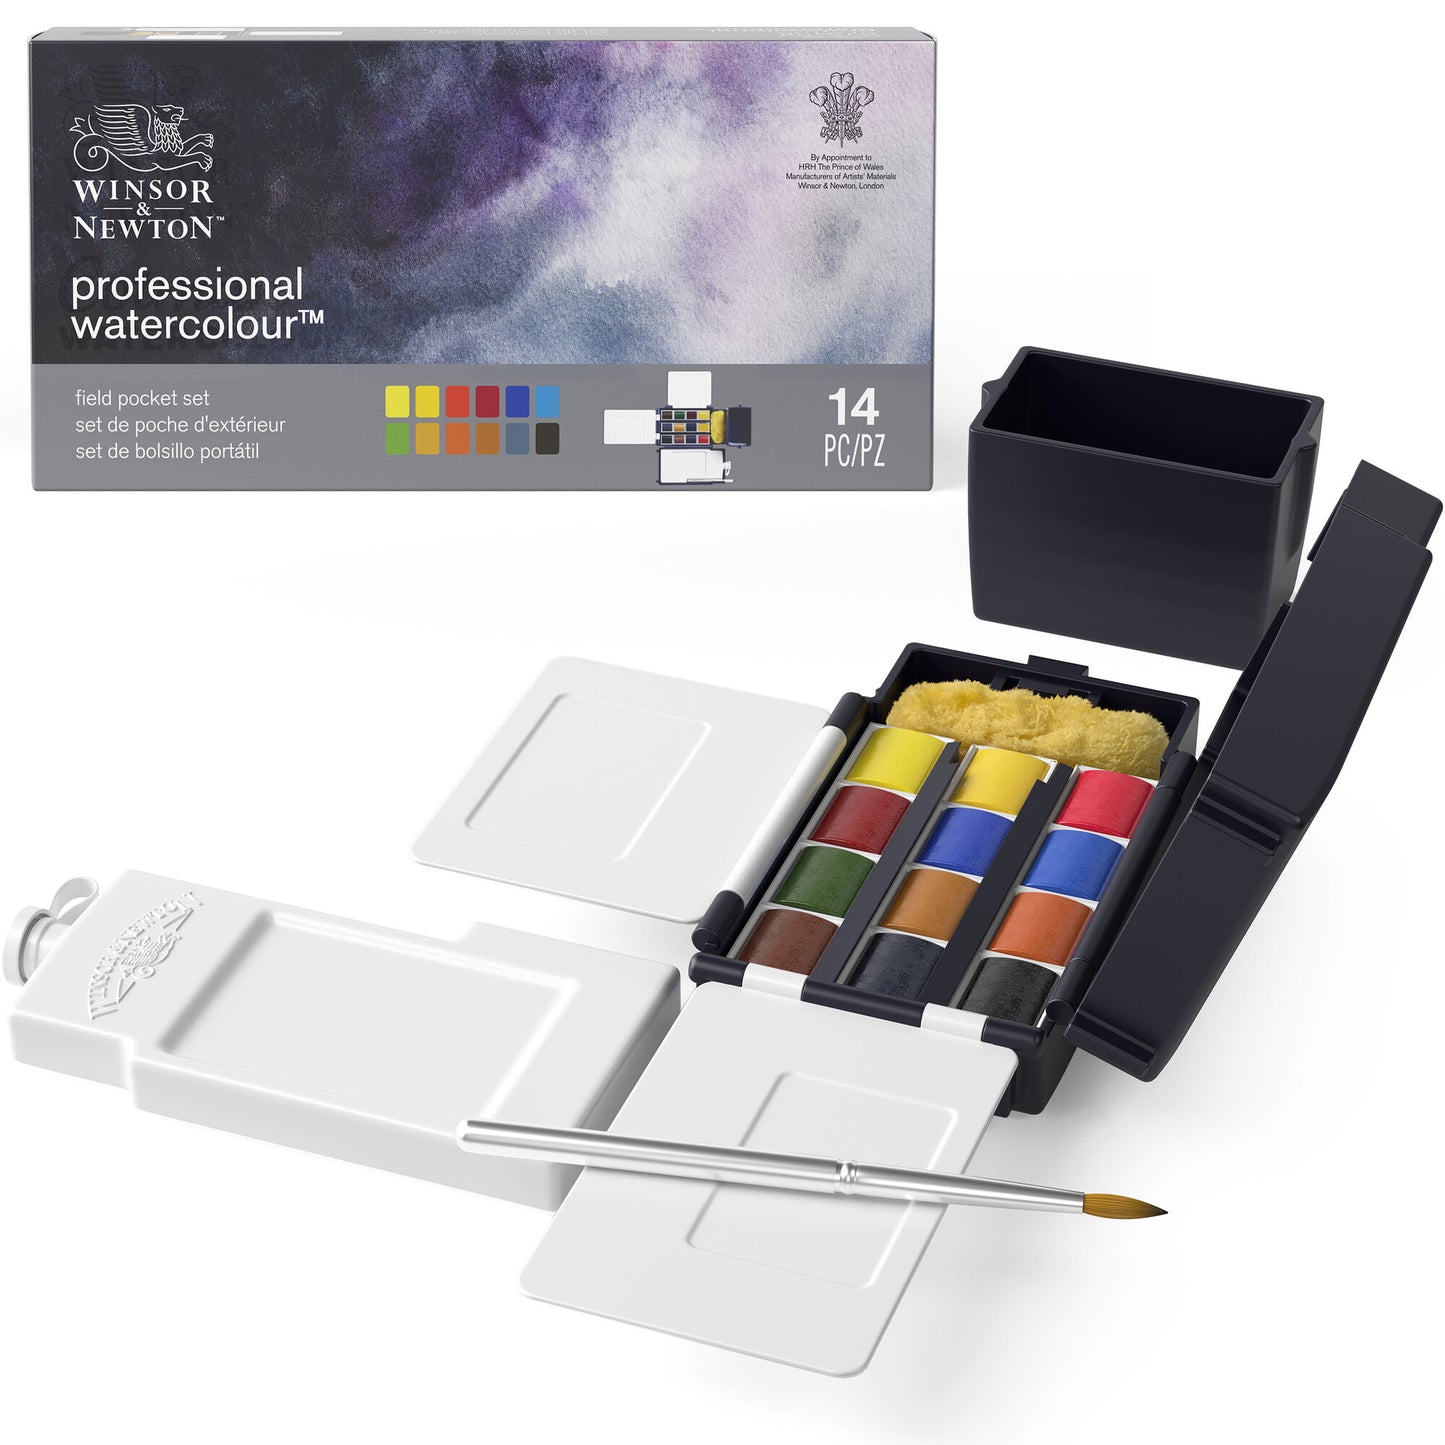 Professional Watercolour Field Box